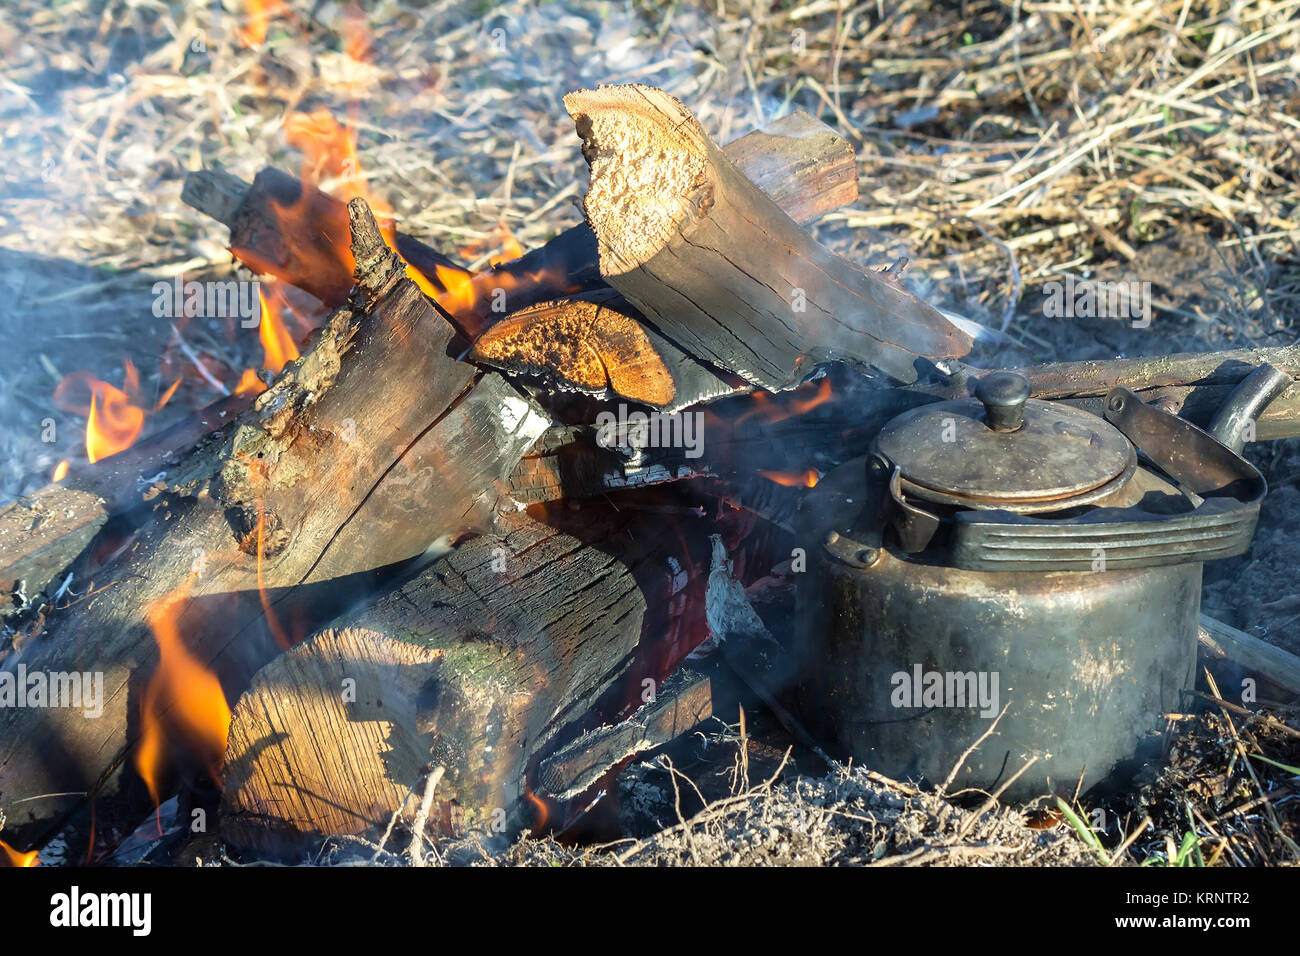 https://c8.alamy.com/comp/KRNTR2/burning-fire-and-a-kettle-near-the-fire-KRNTR2.jpg